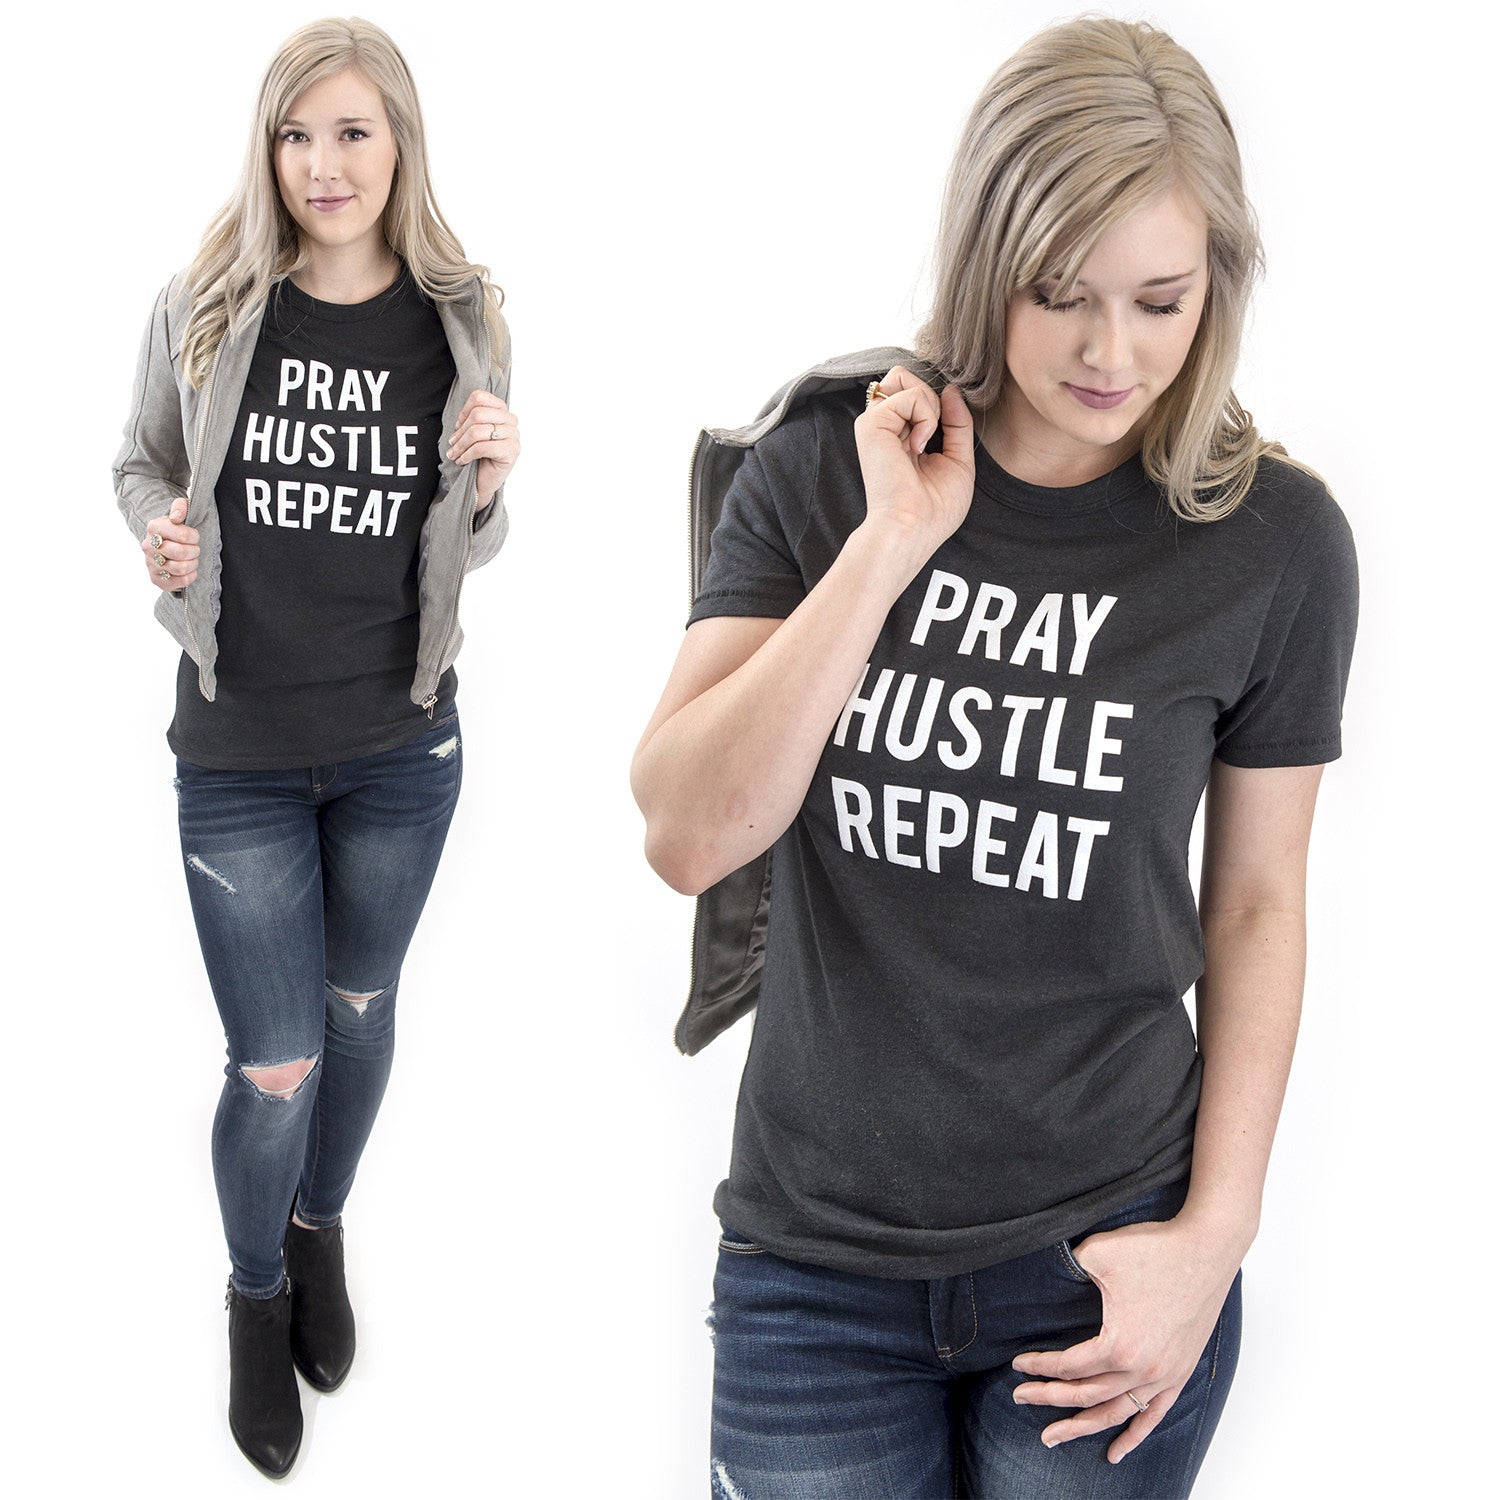 Pray Hustle Repeat Christian graphic tee at Eccentrics Boutique